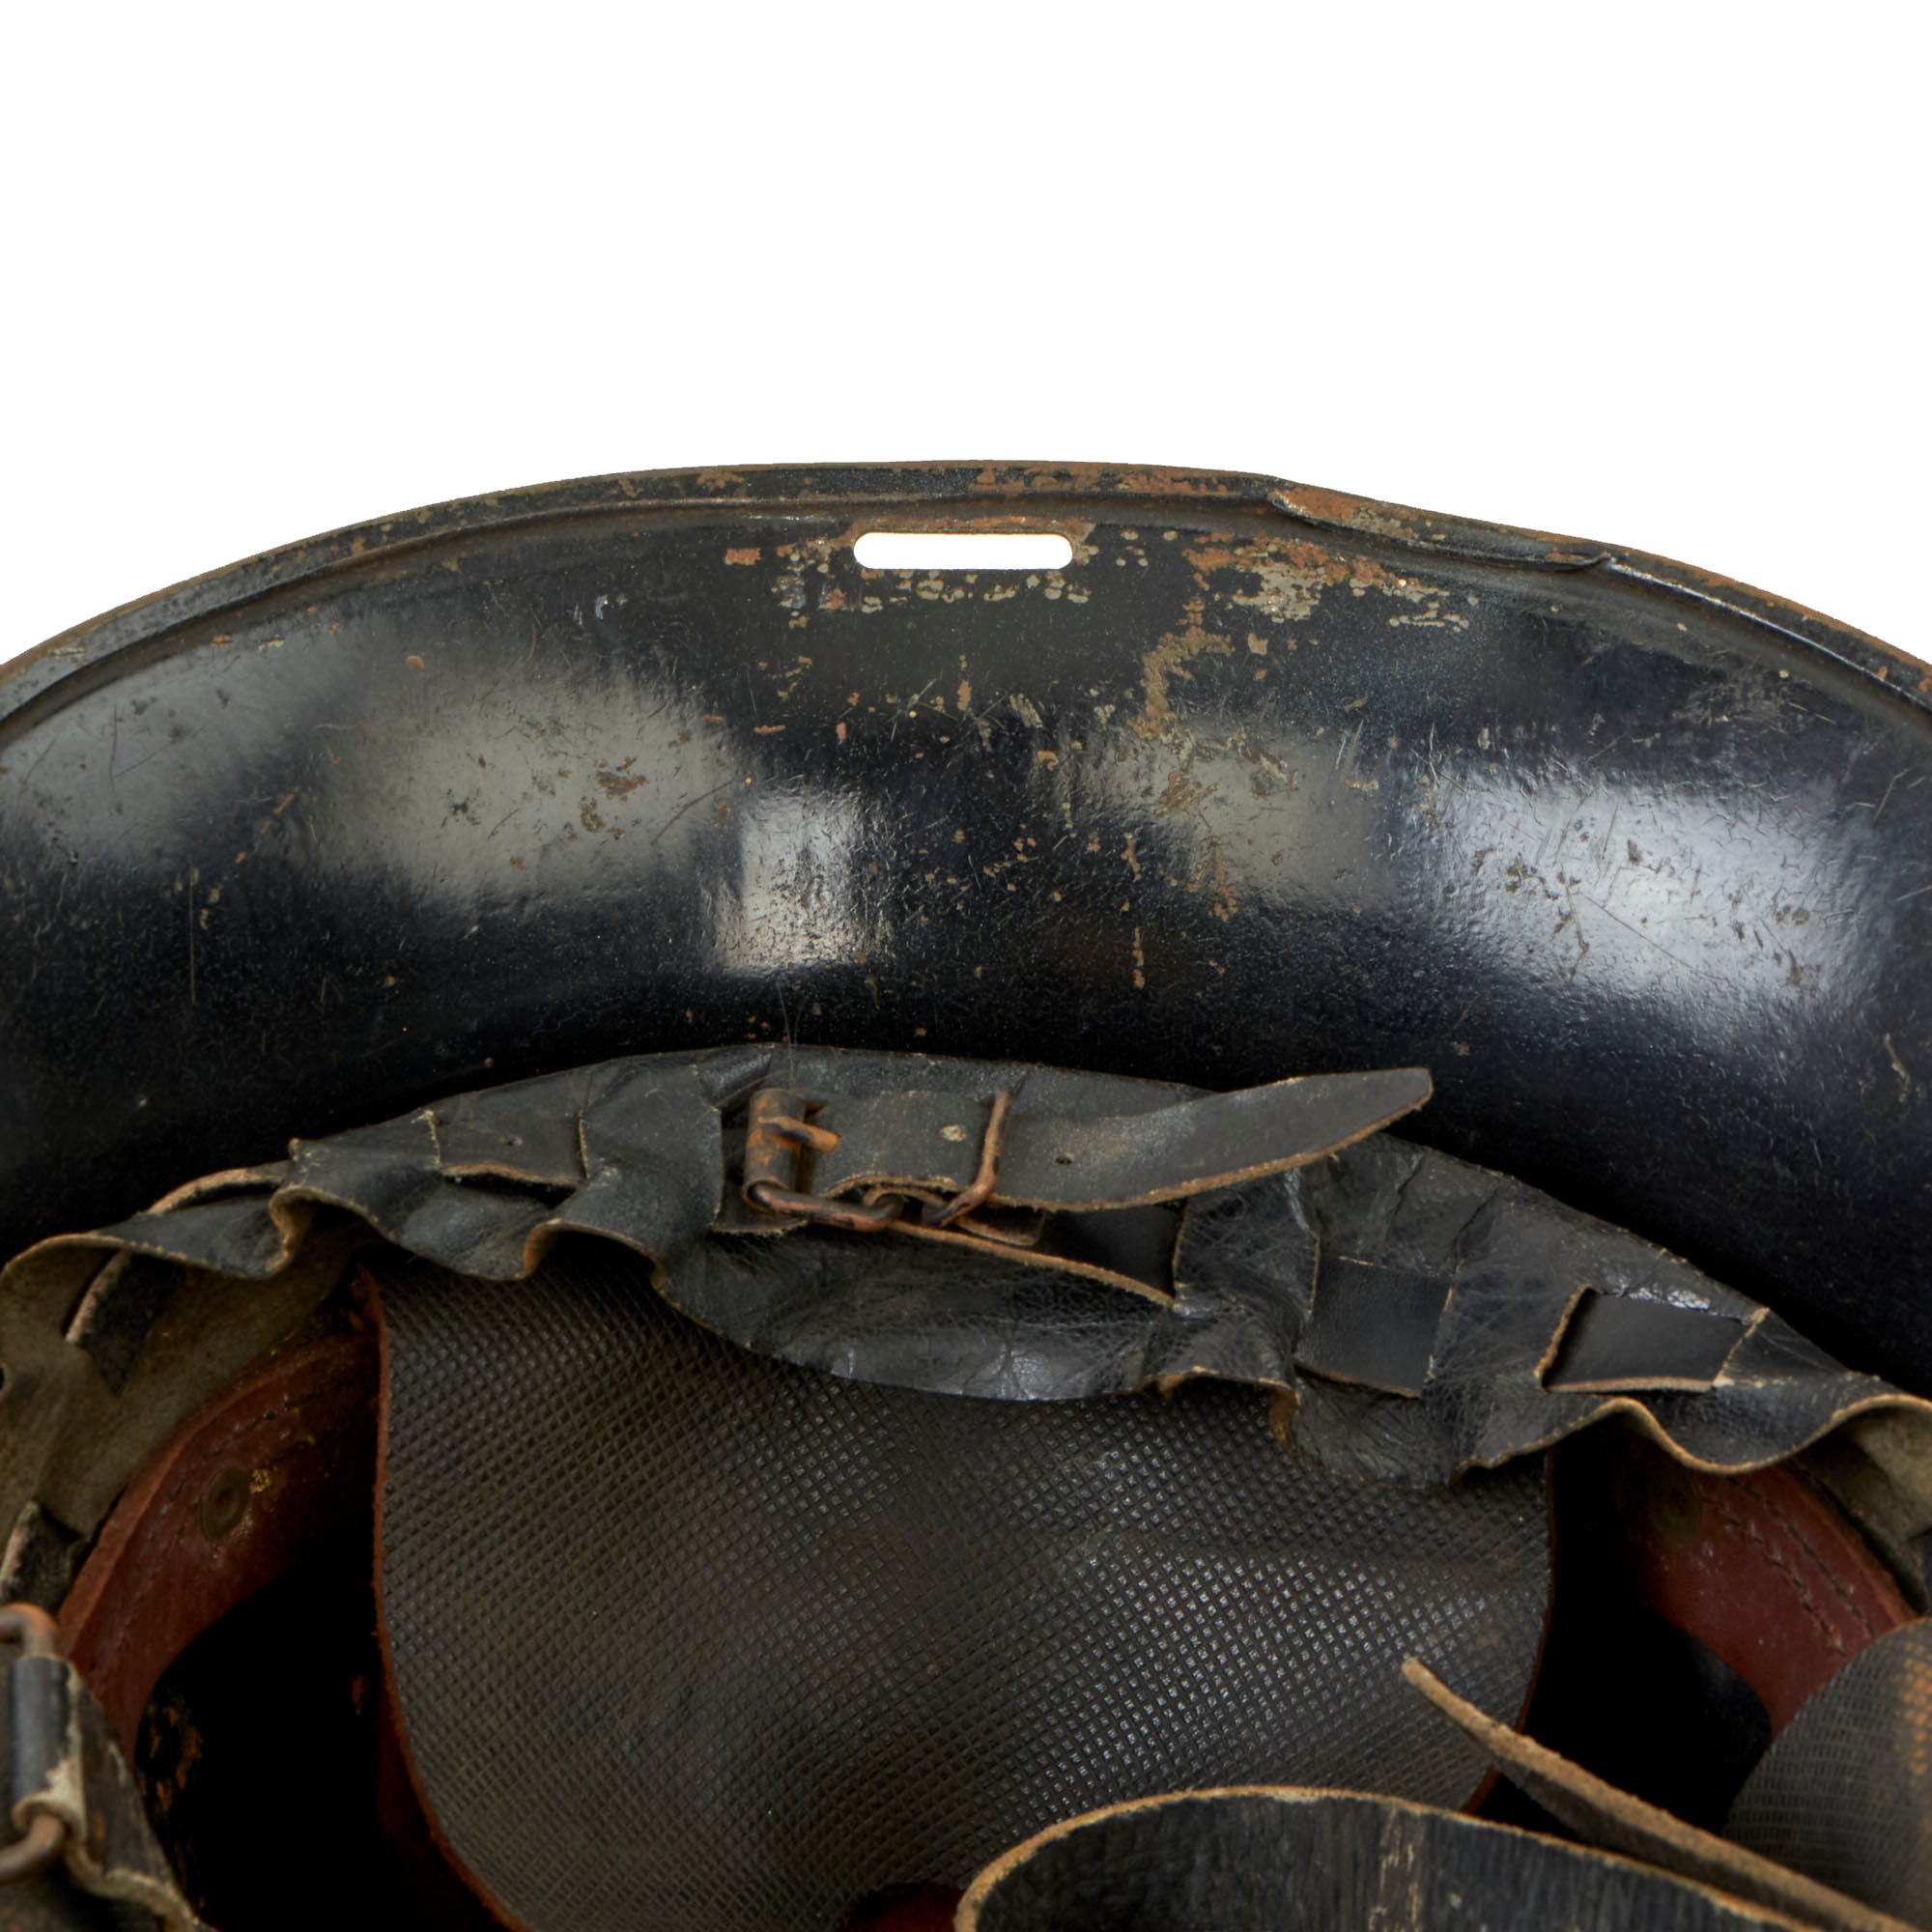 Original Netherlands WWII Dutch M23/27 Steel Helmet - Complete –  International Military Antiques